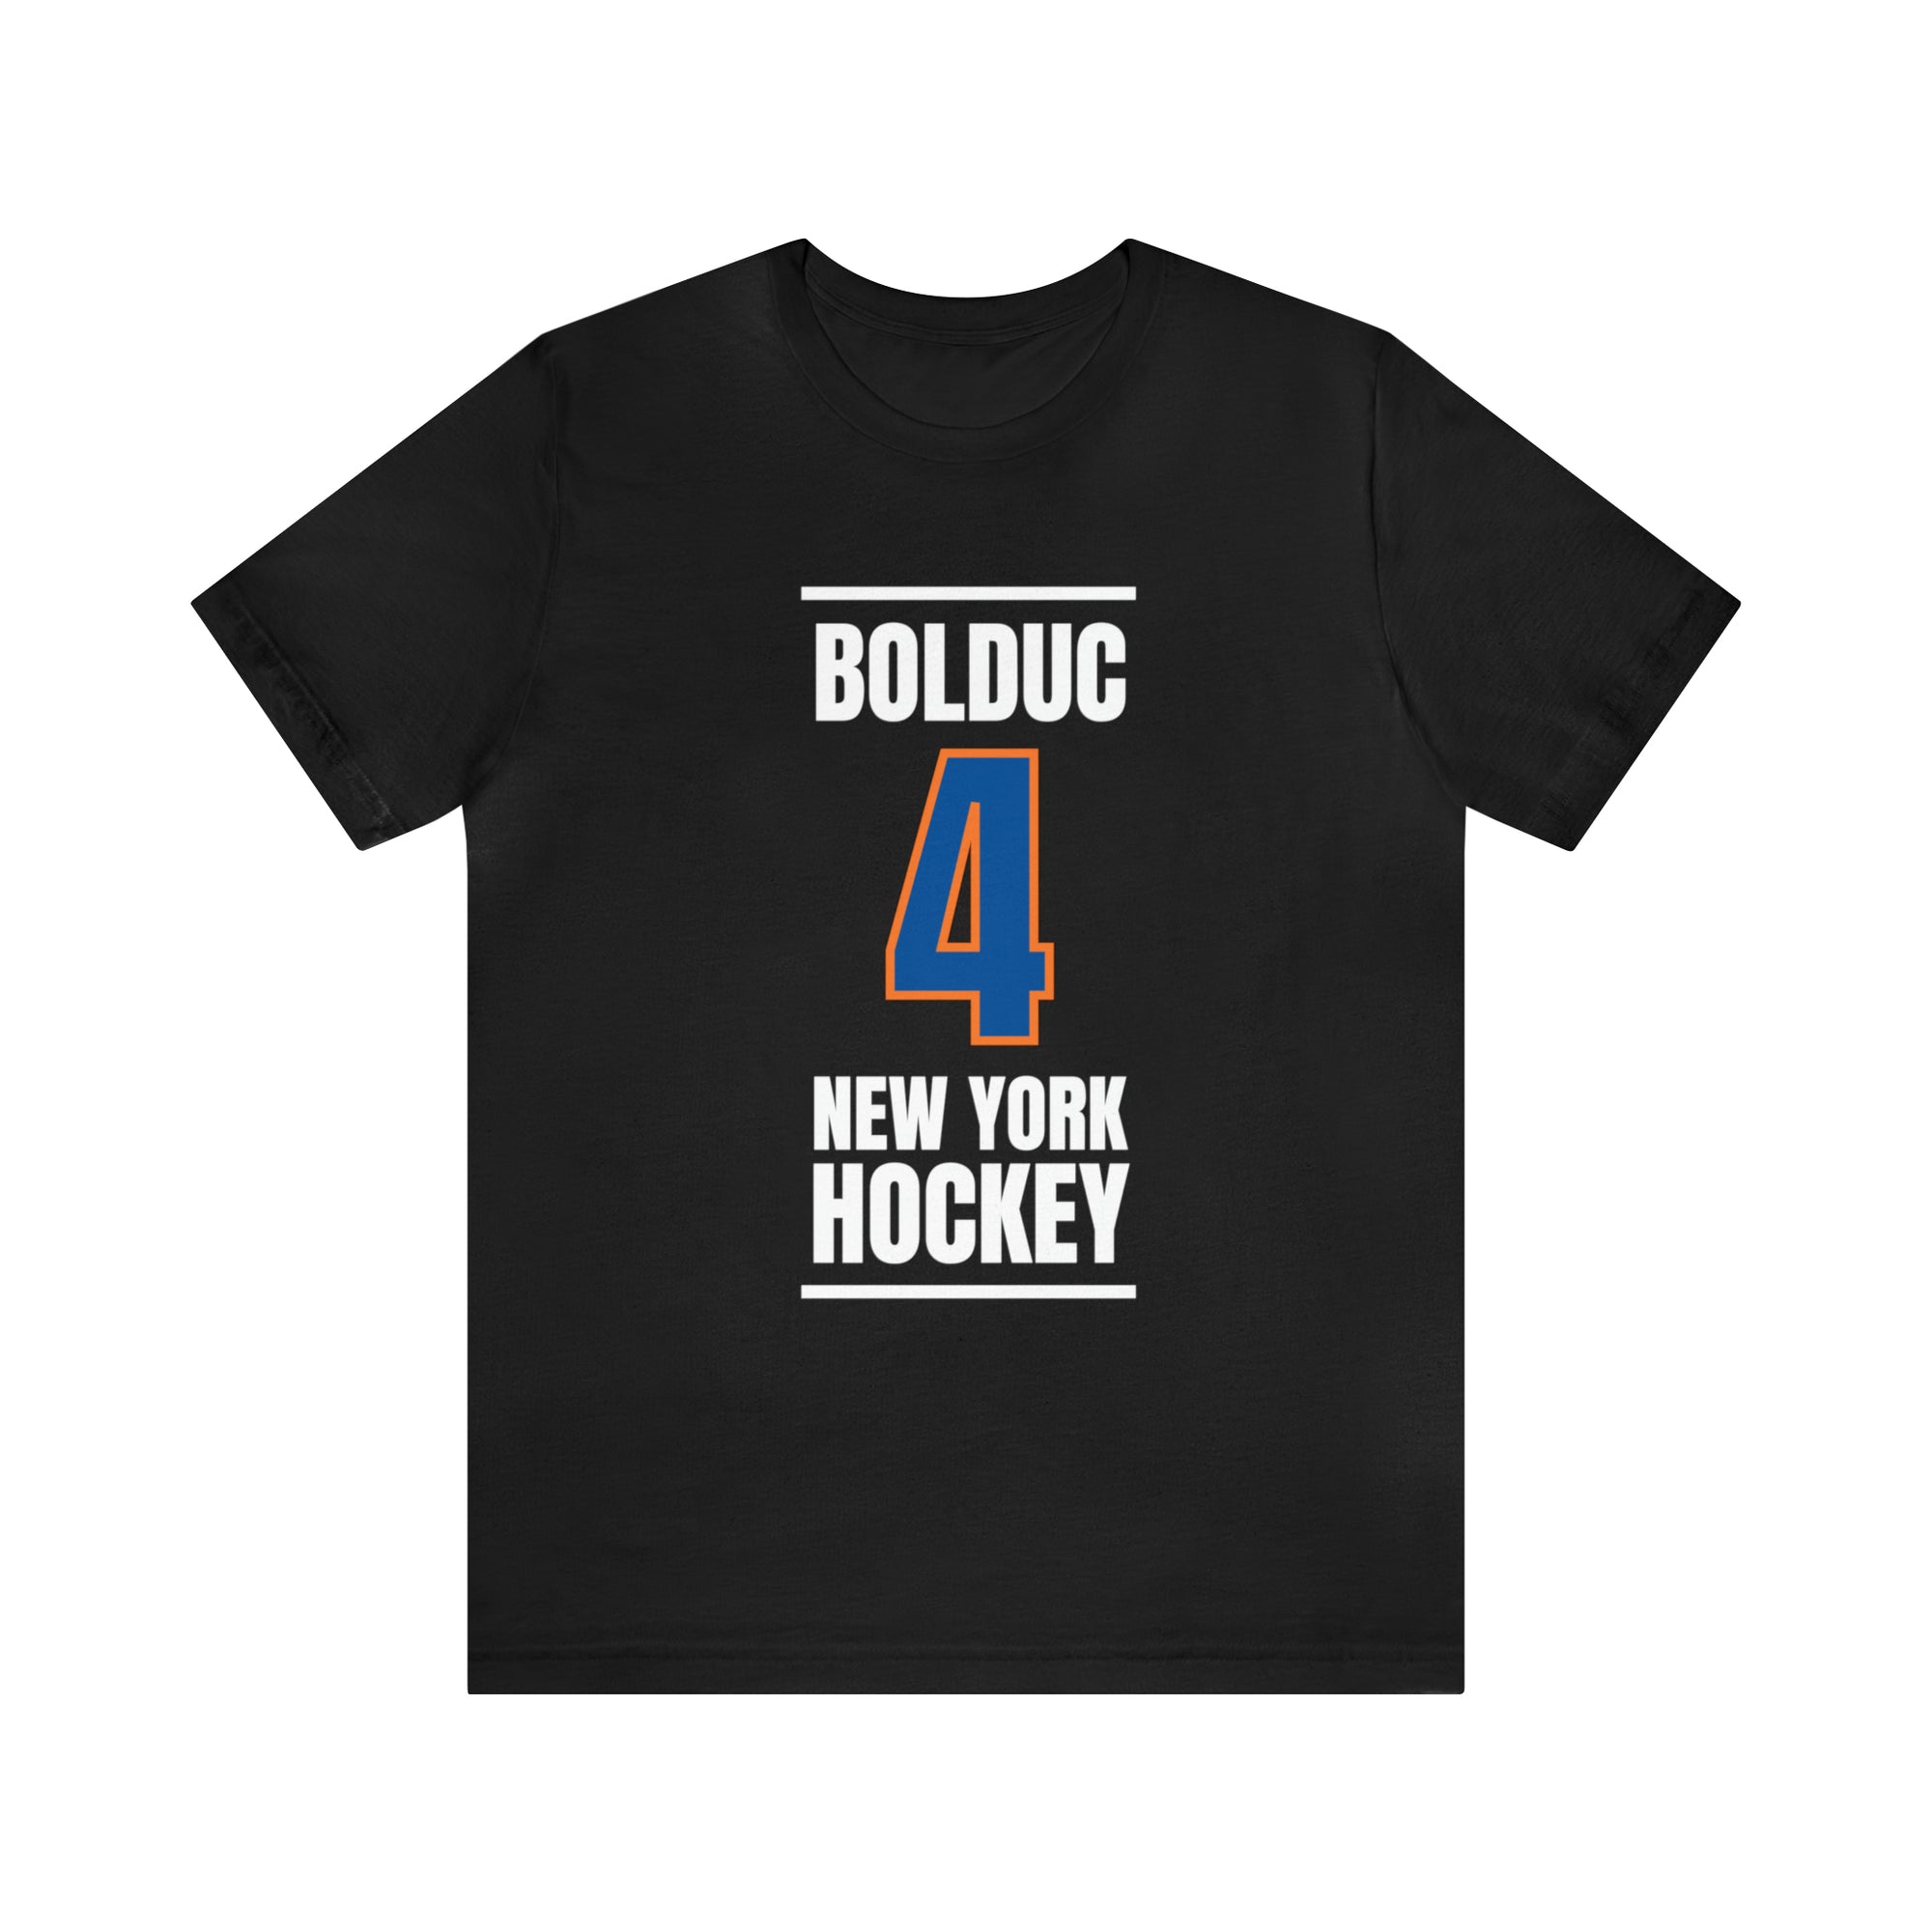 Bolduc 4 New York Hockey Blue Vertical Design Unisex T-Shirt